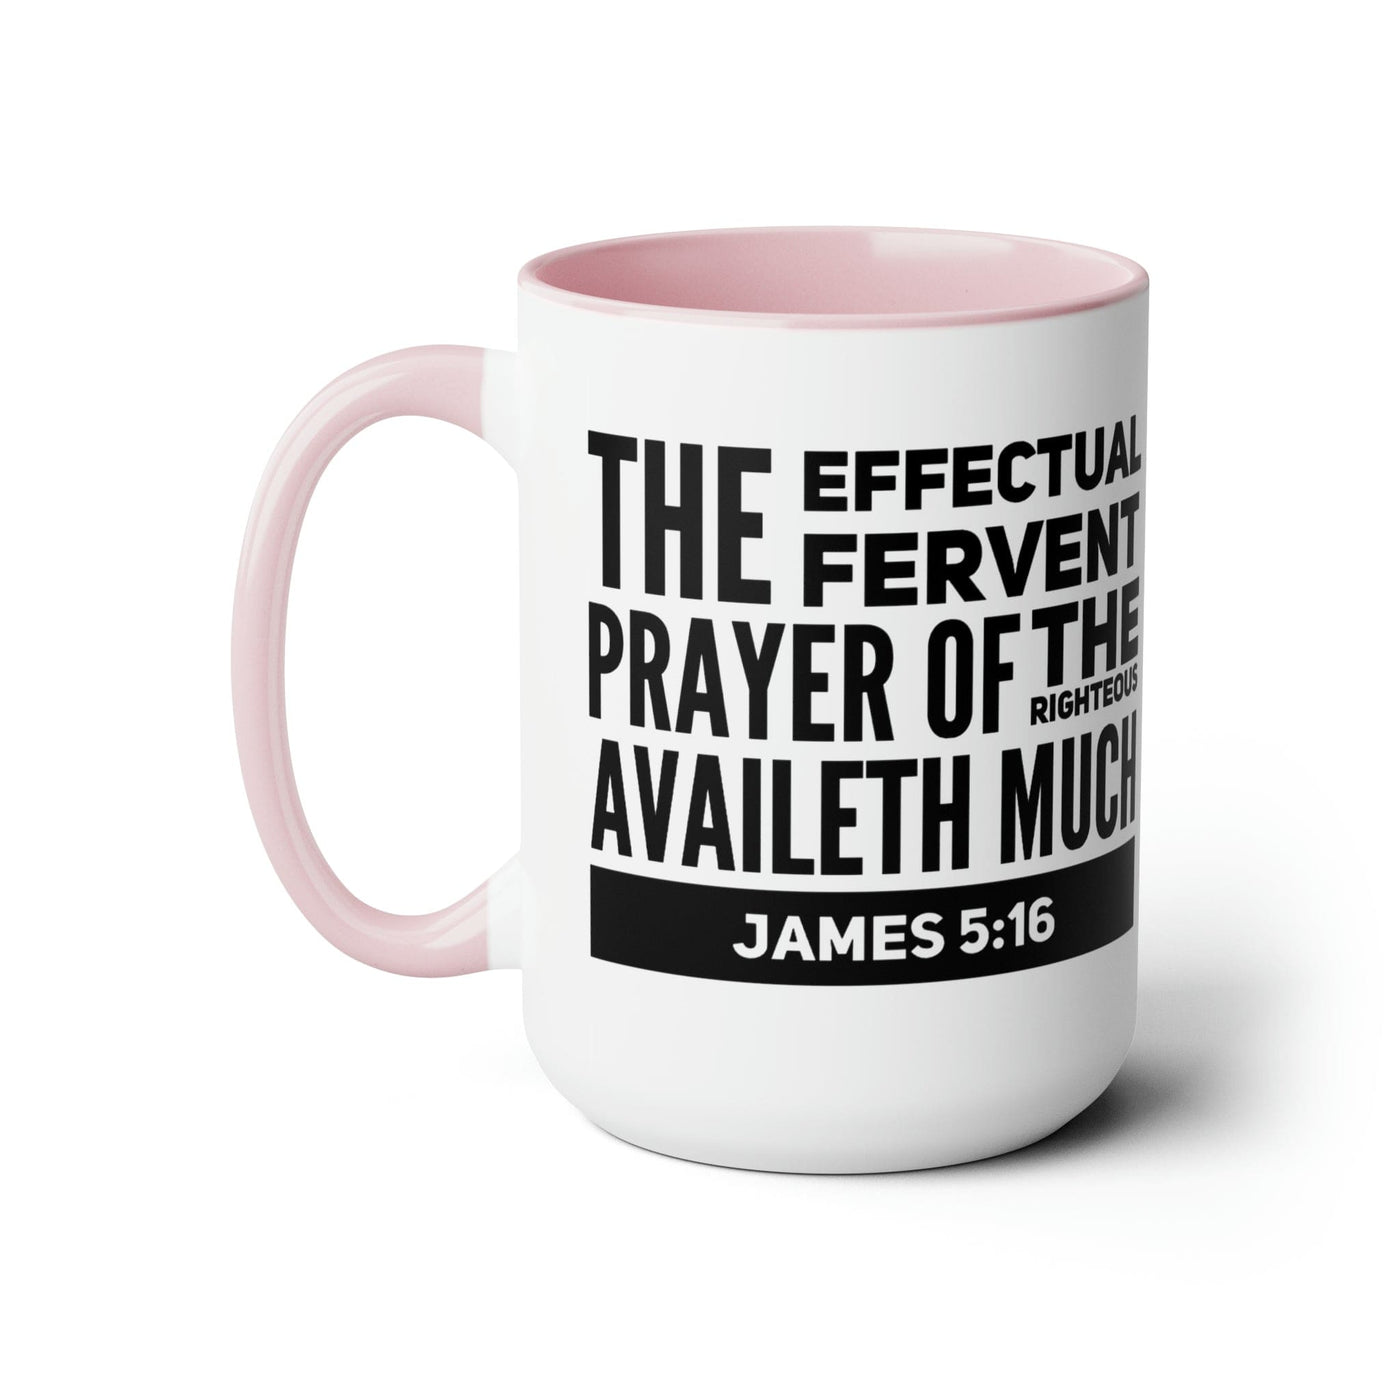 Accent Ceramic Coffee Mug 15oz - The Effectual Fervent Prayer Black